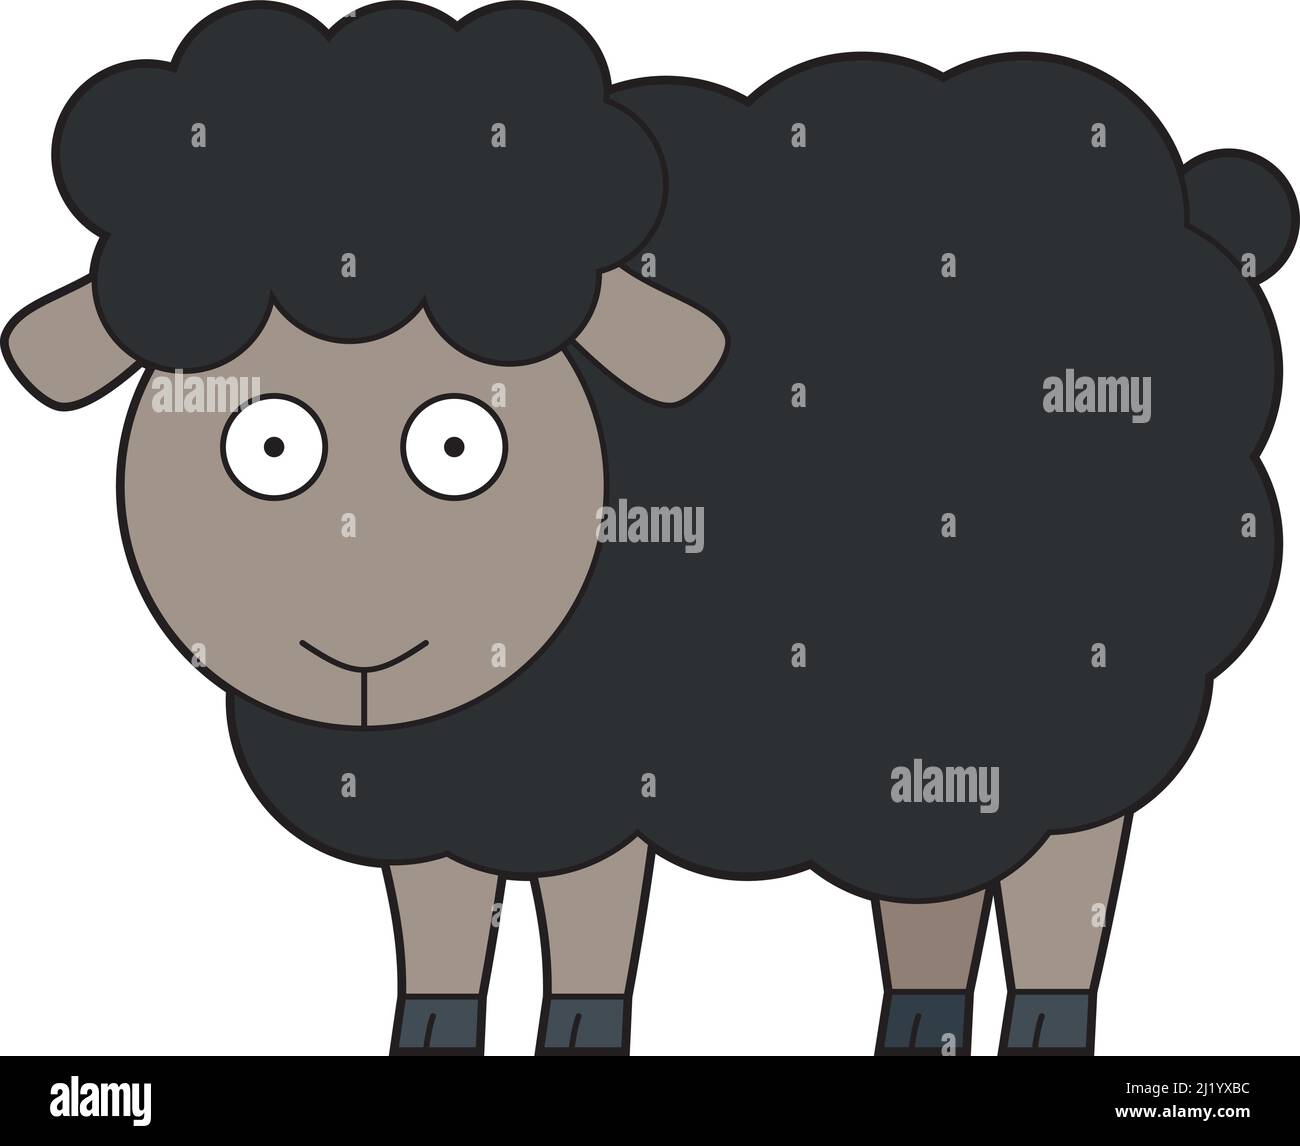 Cute cartoon vector illustration of a black sheep Stock Vector